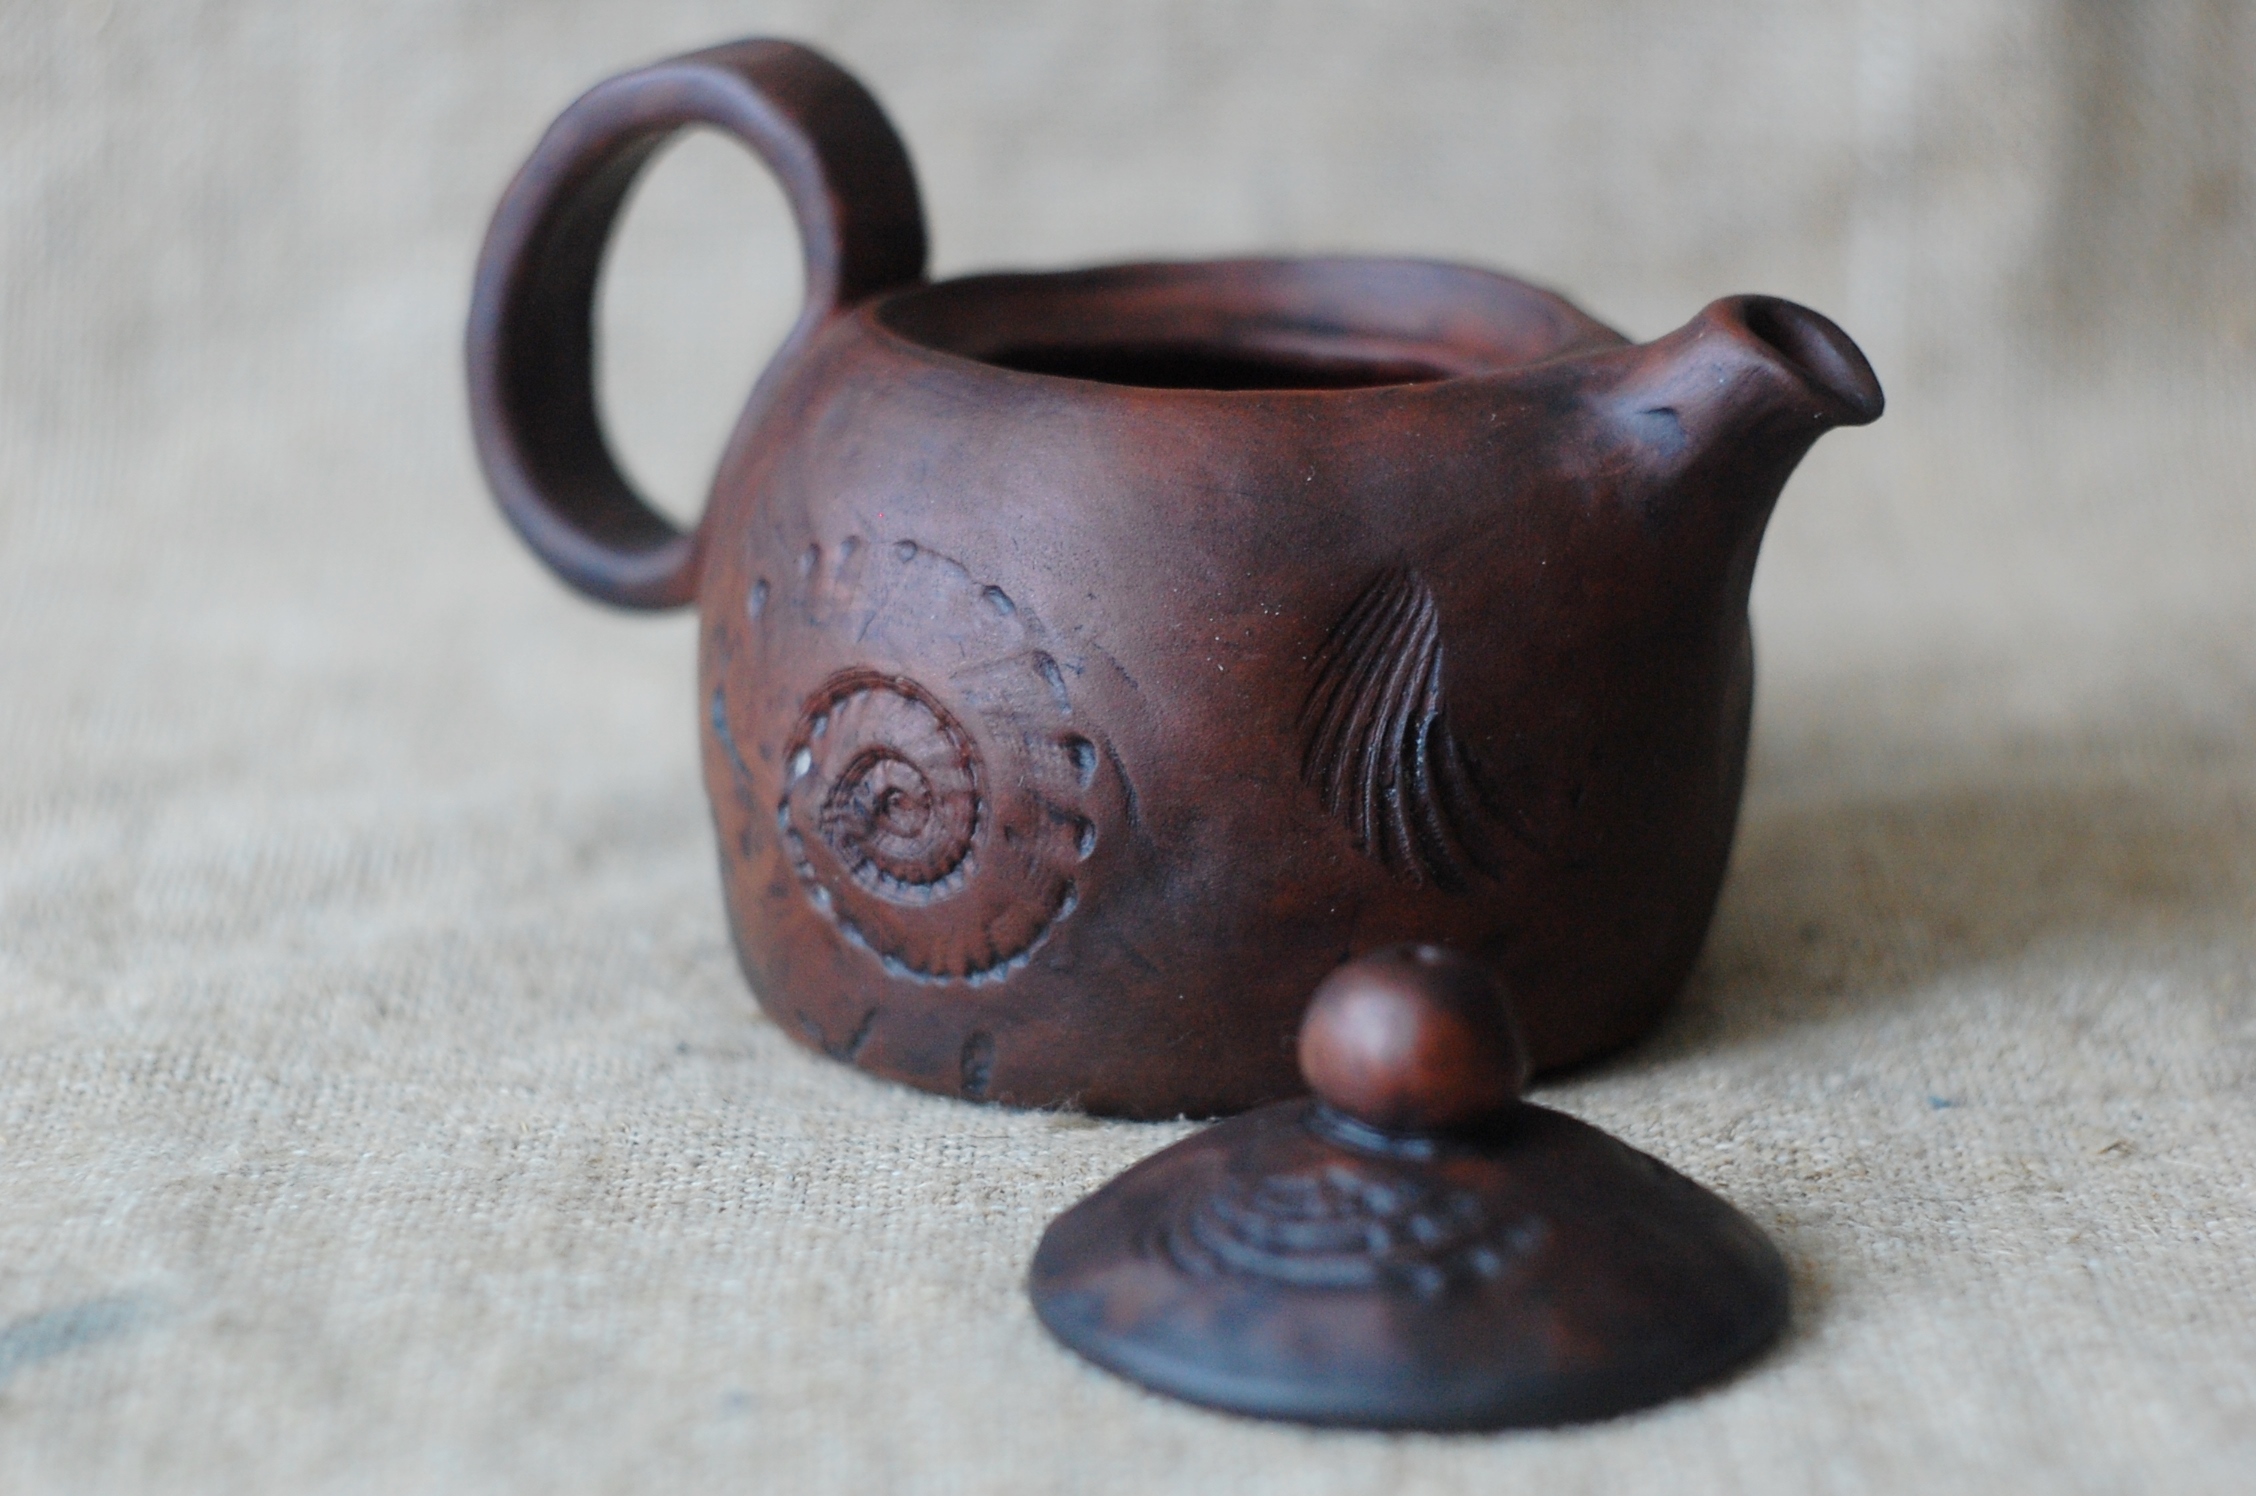 Sea pottery clay tea brewing pot or teapot for tea ceremony